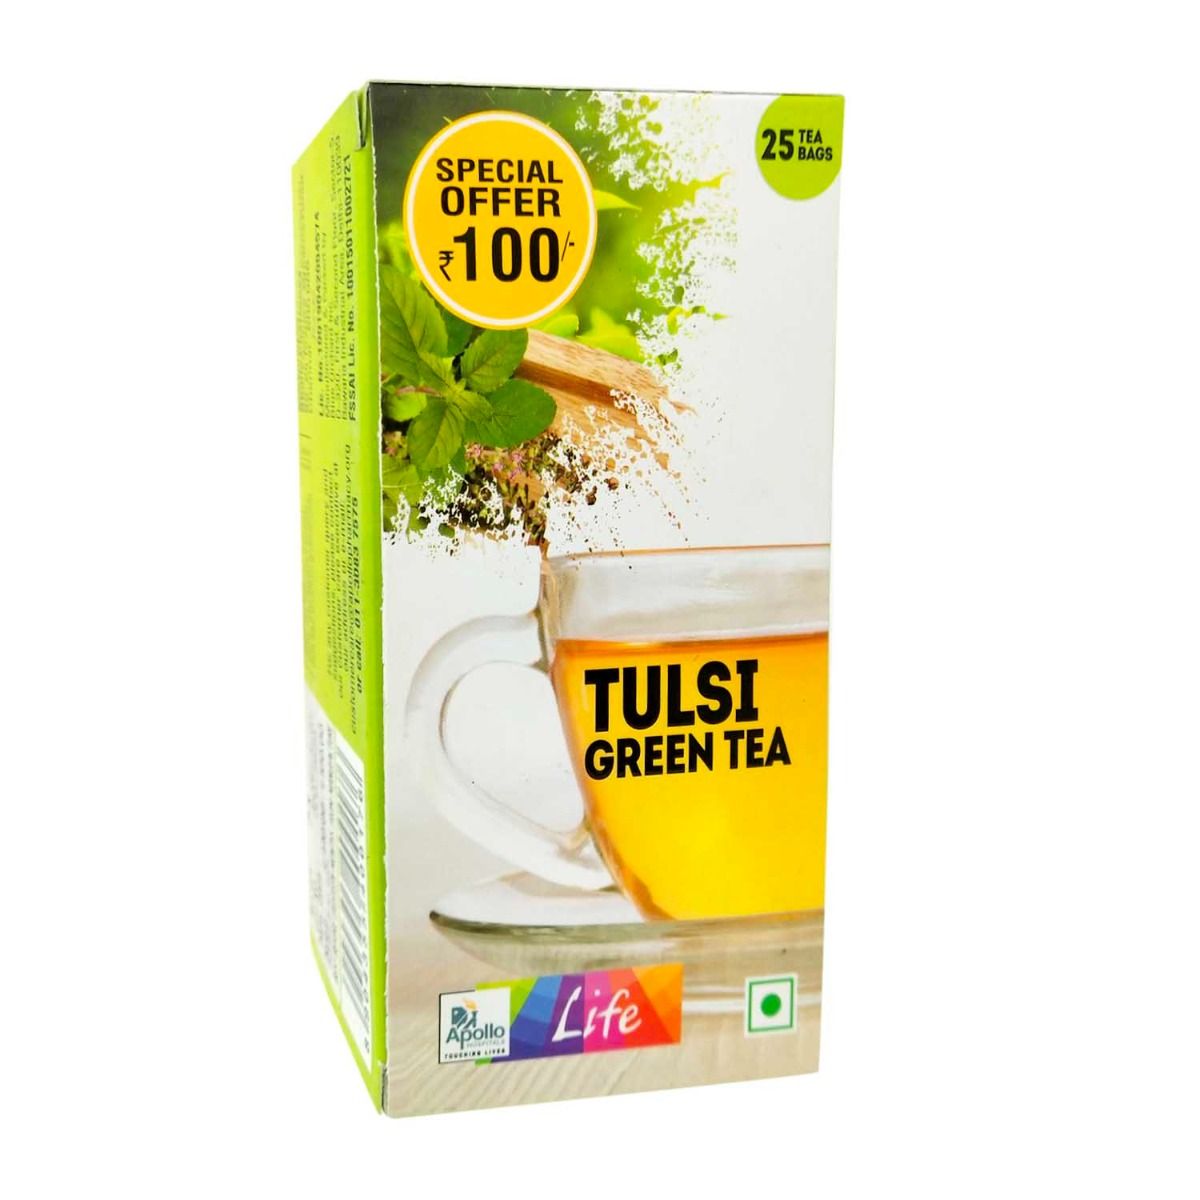 Buy Apollo Life Tulsi Green Tea Bags, 25 Count Online